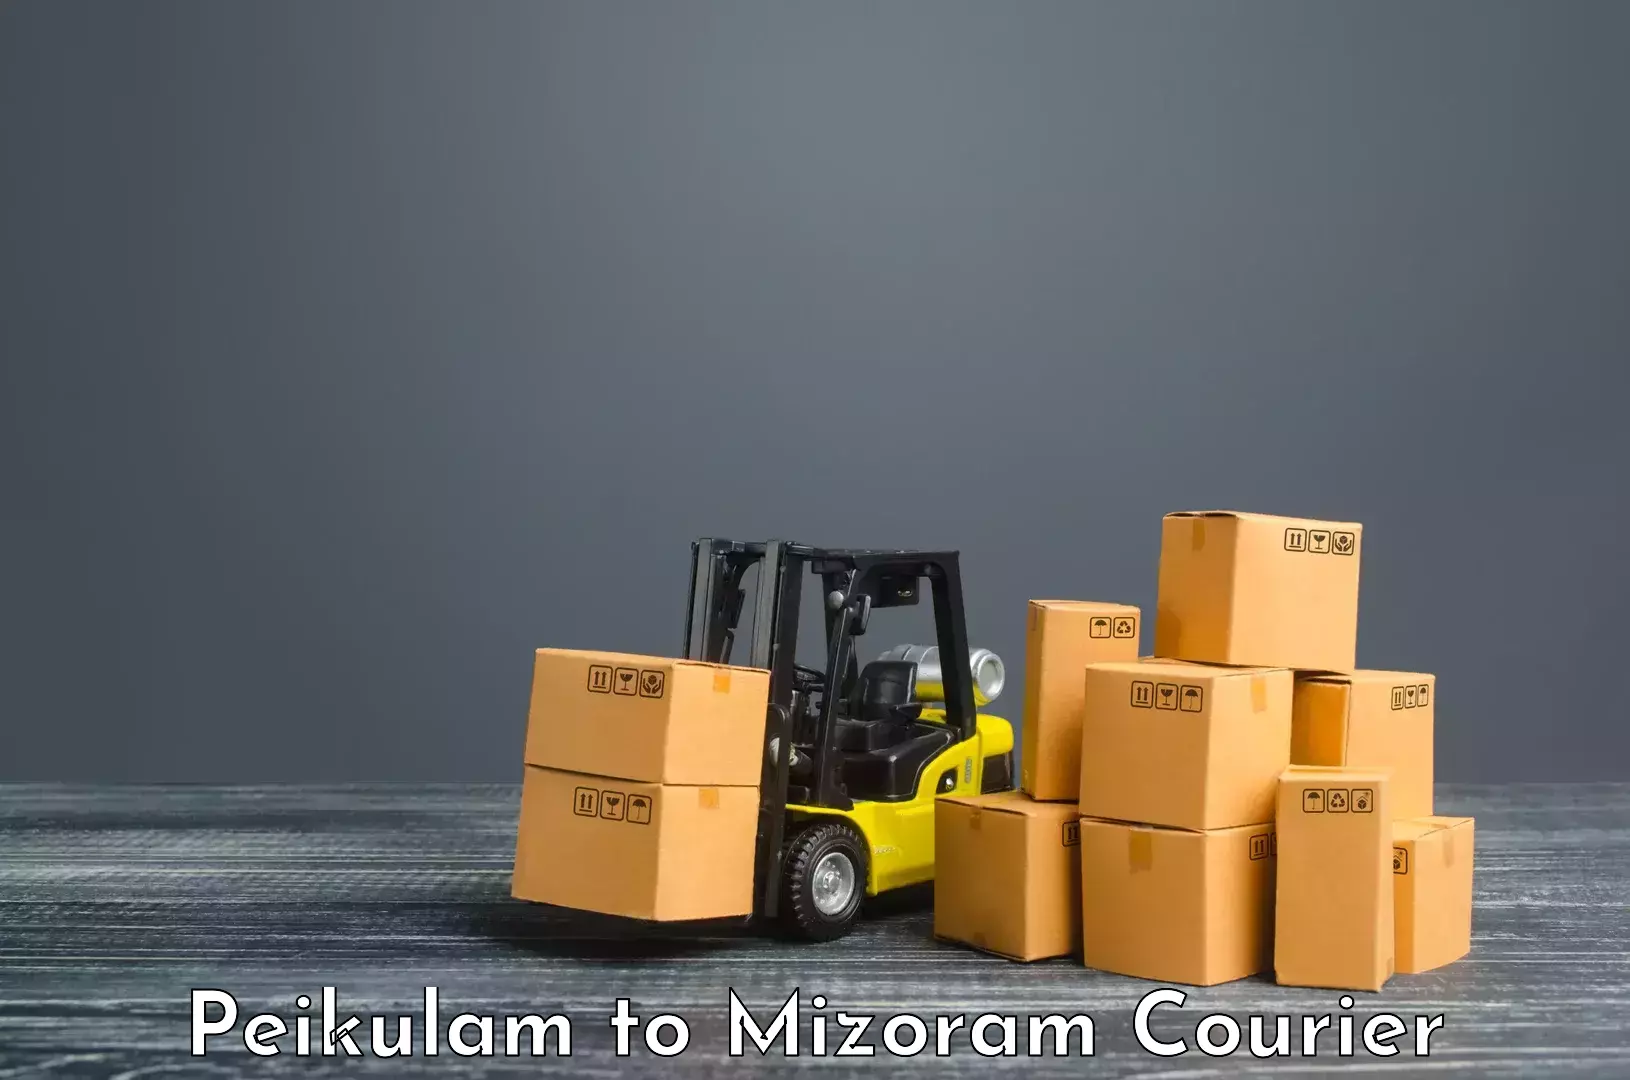 Flexible delivery scheduling Peikulam to Mizoram